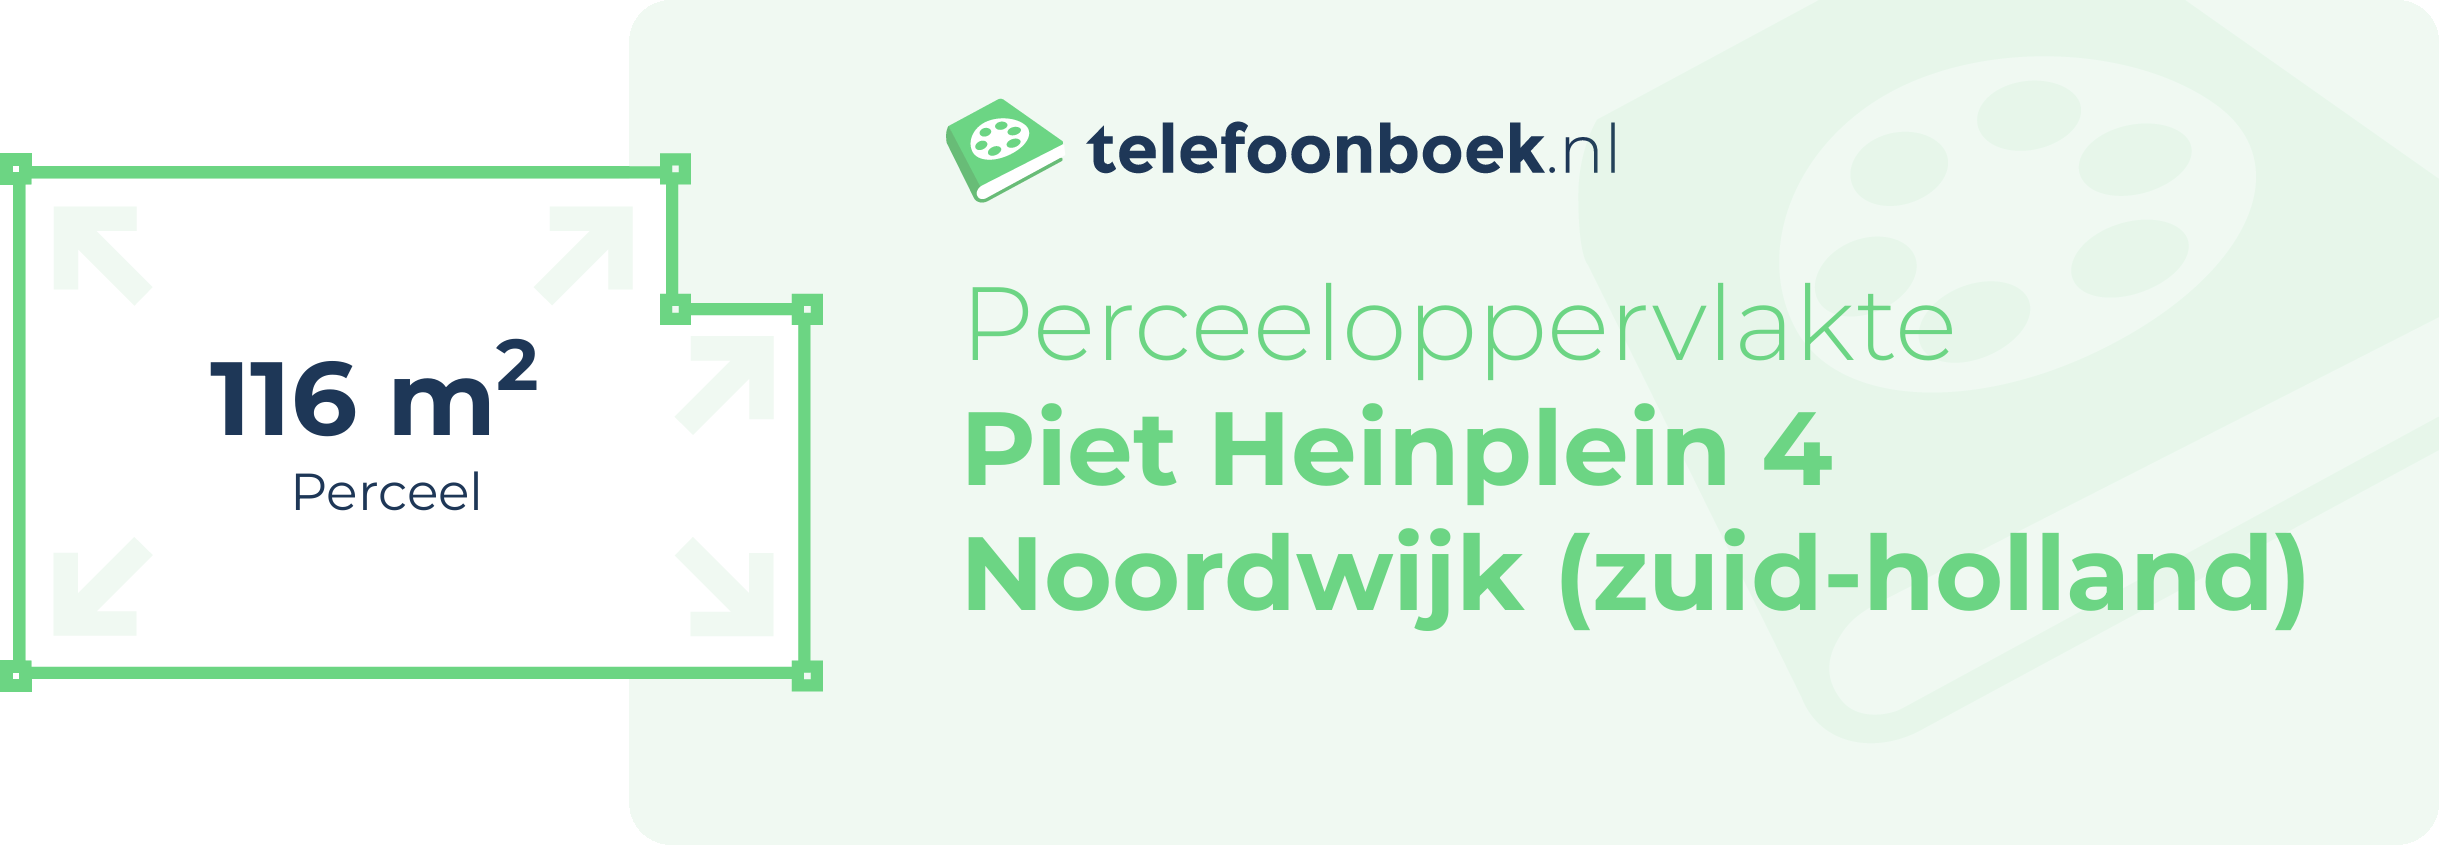 Perceeloppervlakte Piet Heinplein 4 Noordwijk (Zuid-Holland)